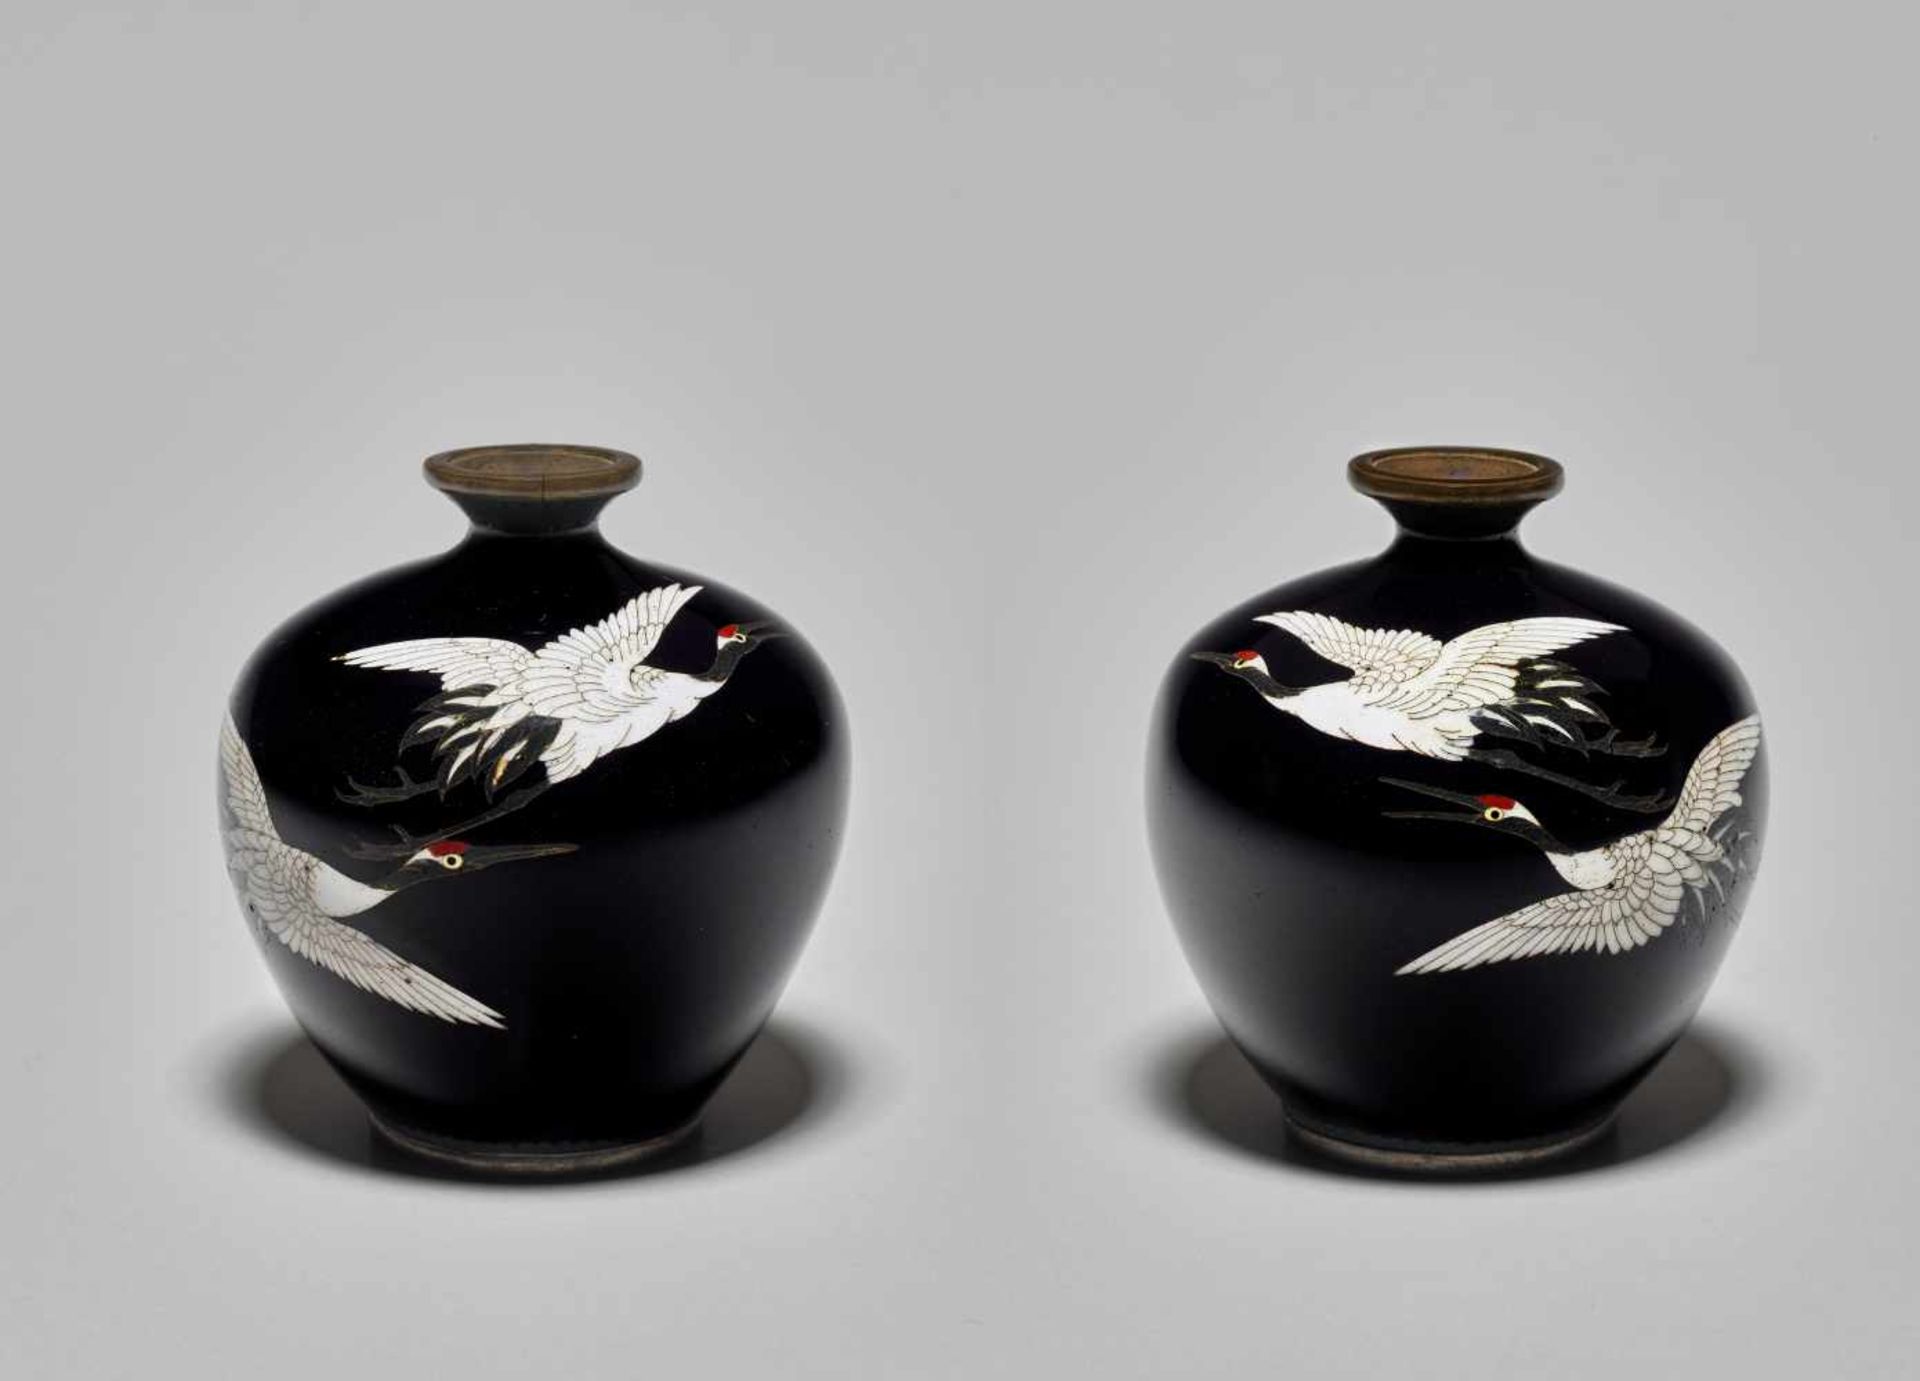 PAIR OF CLOISONNÉ VASES WITH CRANES Japan, Meiji period (1868-1912). A pair of cloisonné vases